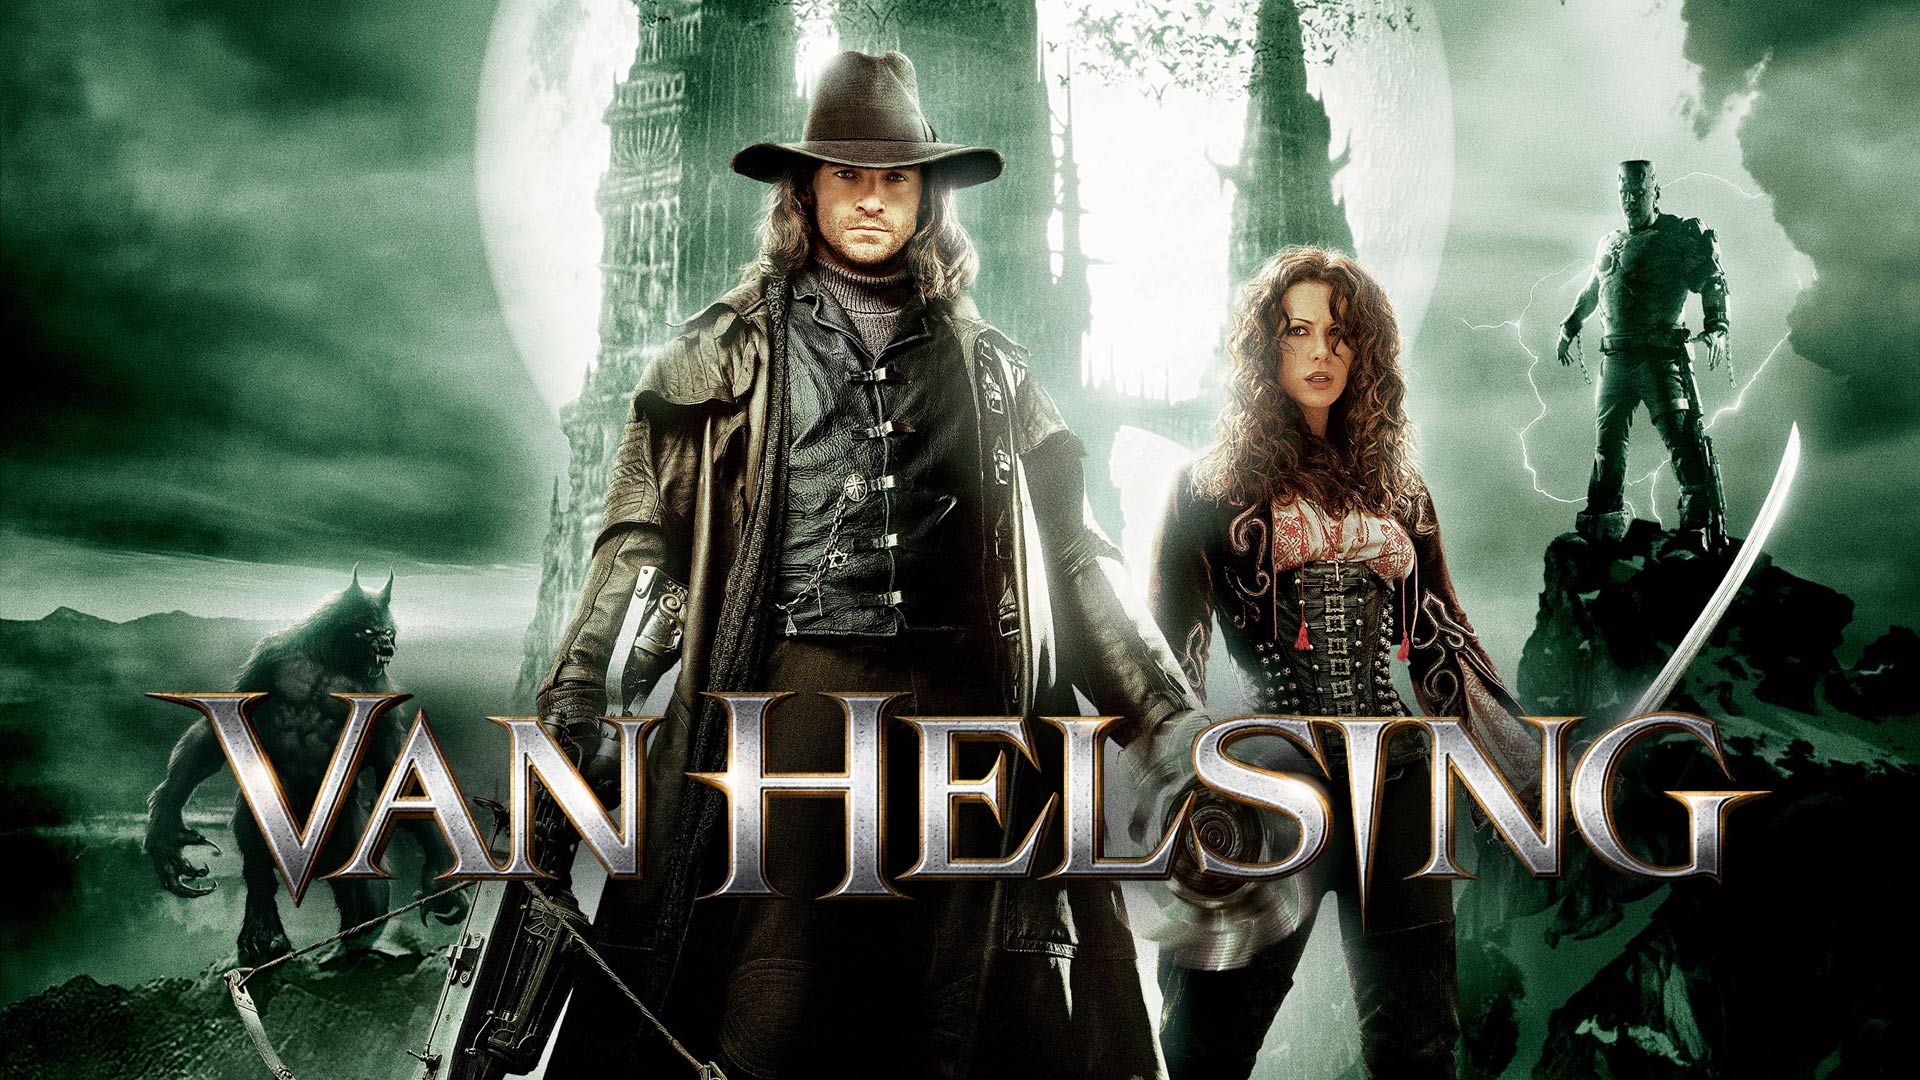 donald kaufman recommends Van Helsing 2 Full Movies